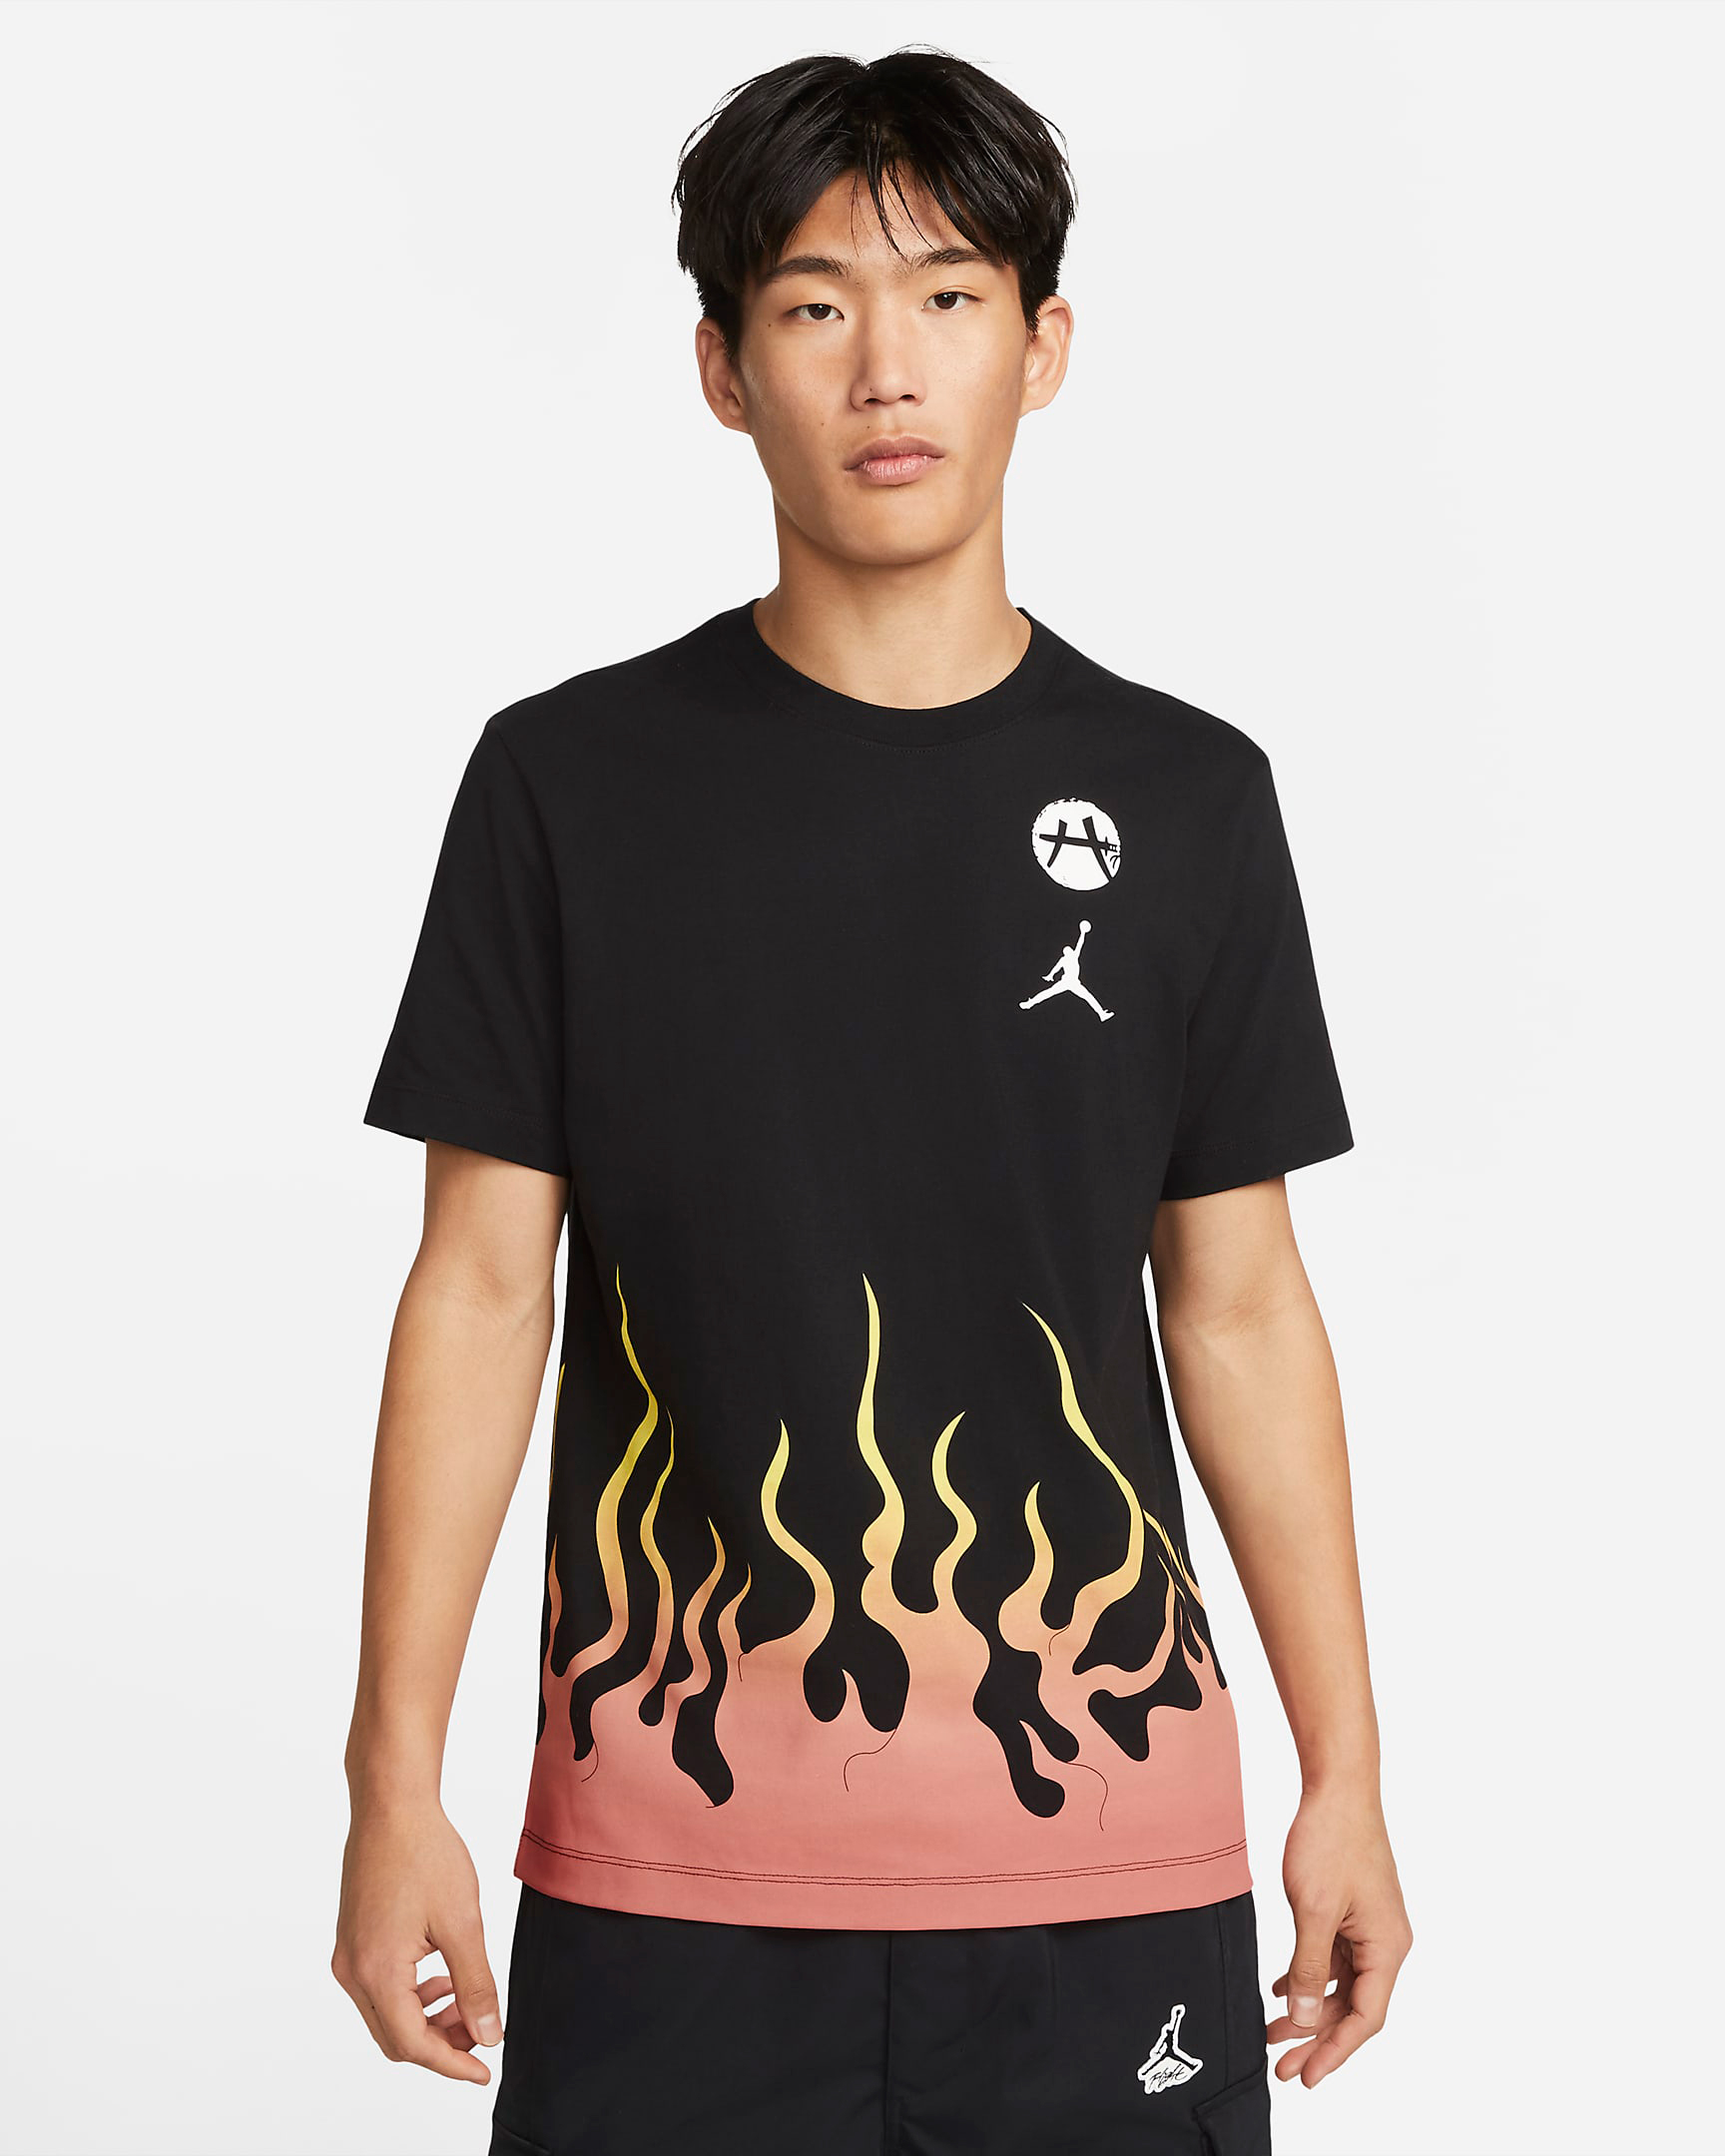 jordan-rui-hachimura-black-samurai-t-shirt-1